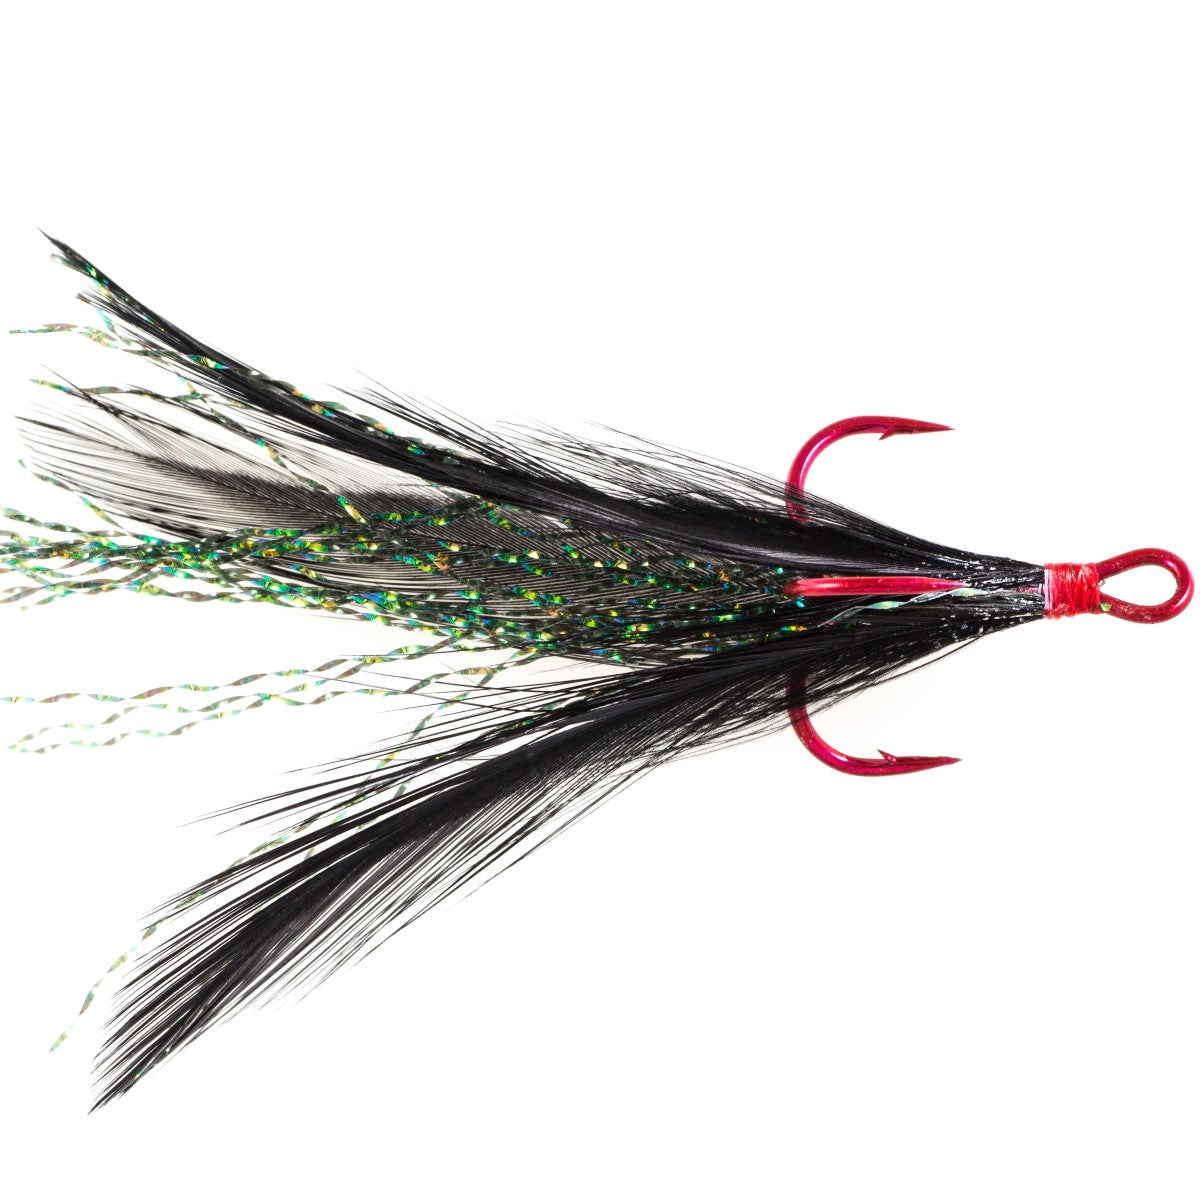 Gamakatsu Feathered Treble Hook #4 NS Black White Feather 2/Pk